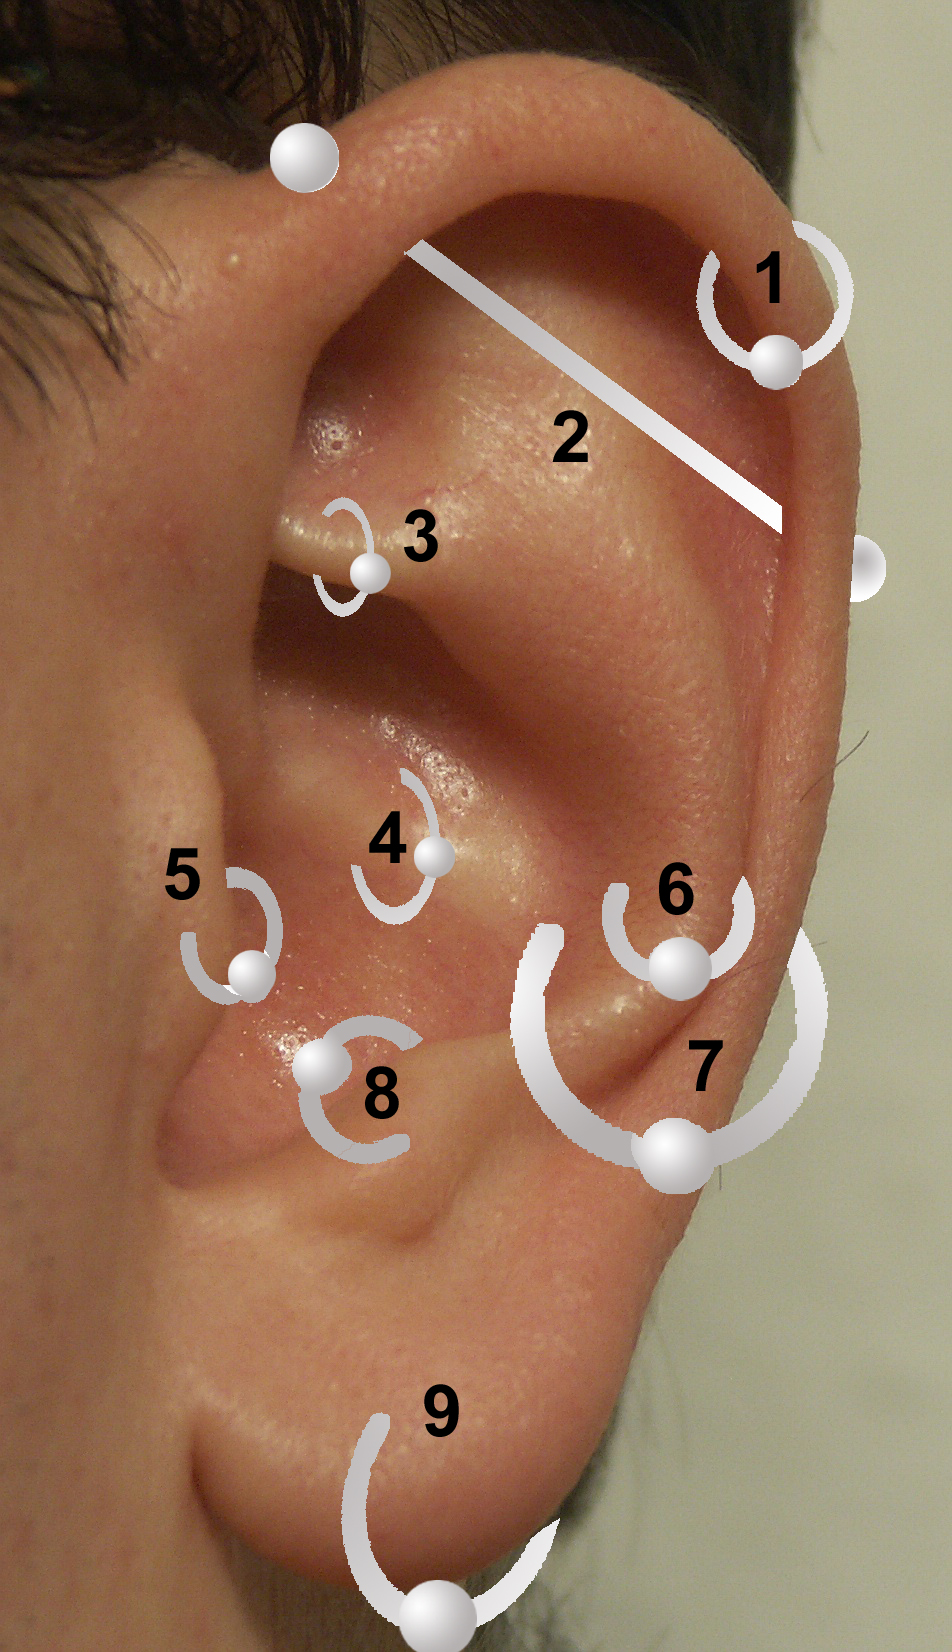 Earring - Wikipedia